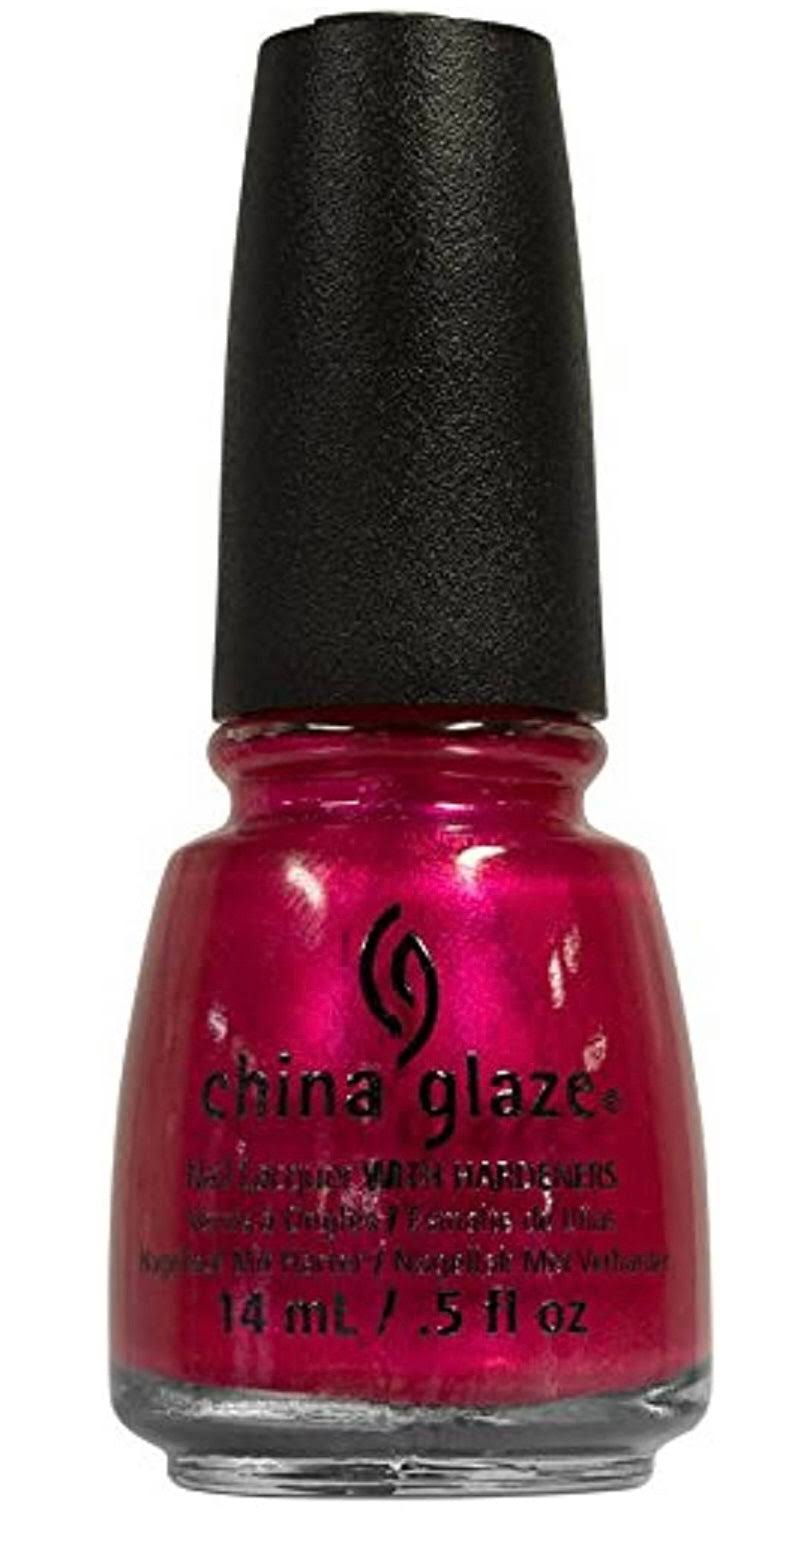 China Glaze Nail Lacquer - Sexy Silhouette, 0.5ml